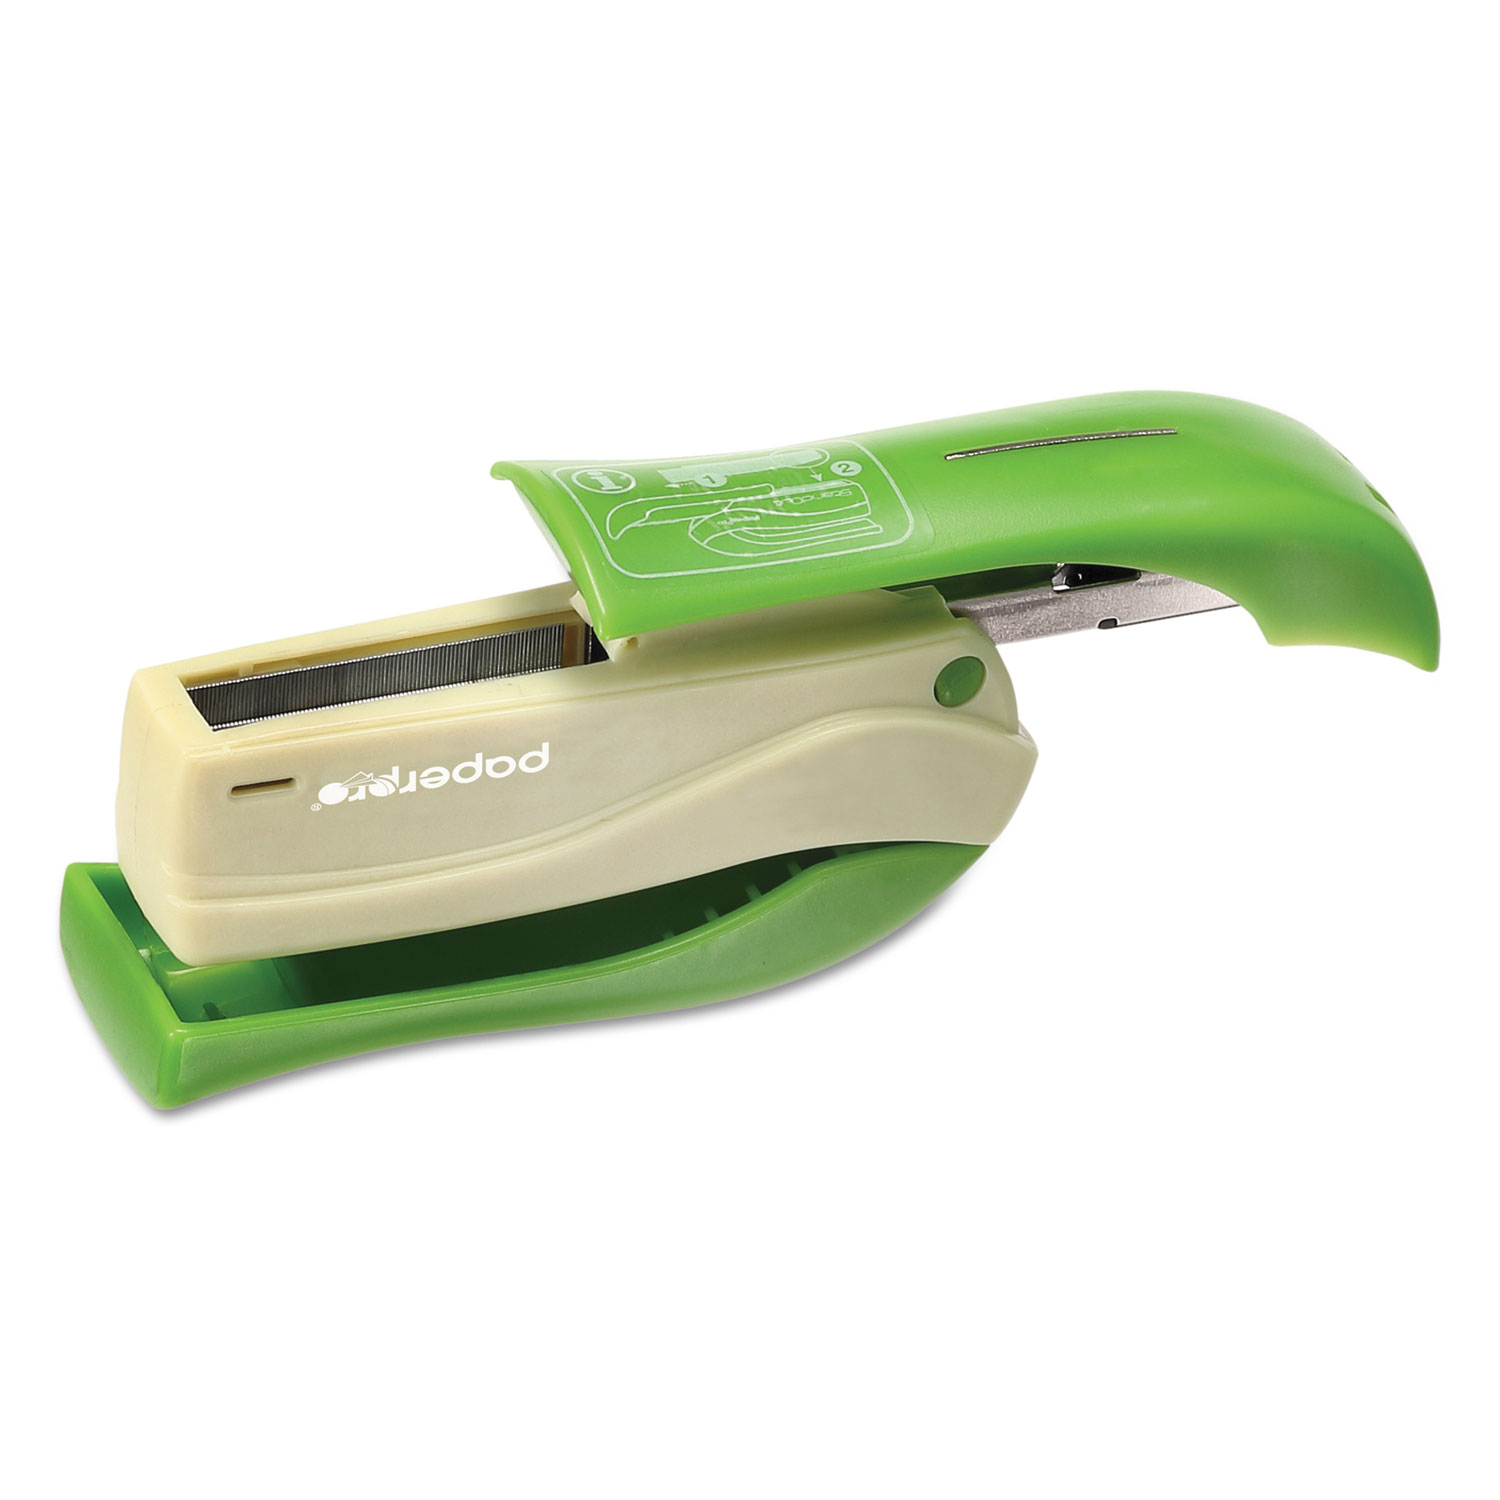 inSHAPE 15 Compact Stapler, 15-Sheet Capacity, Green